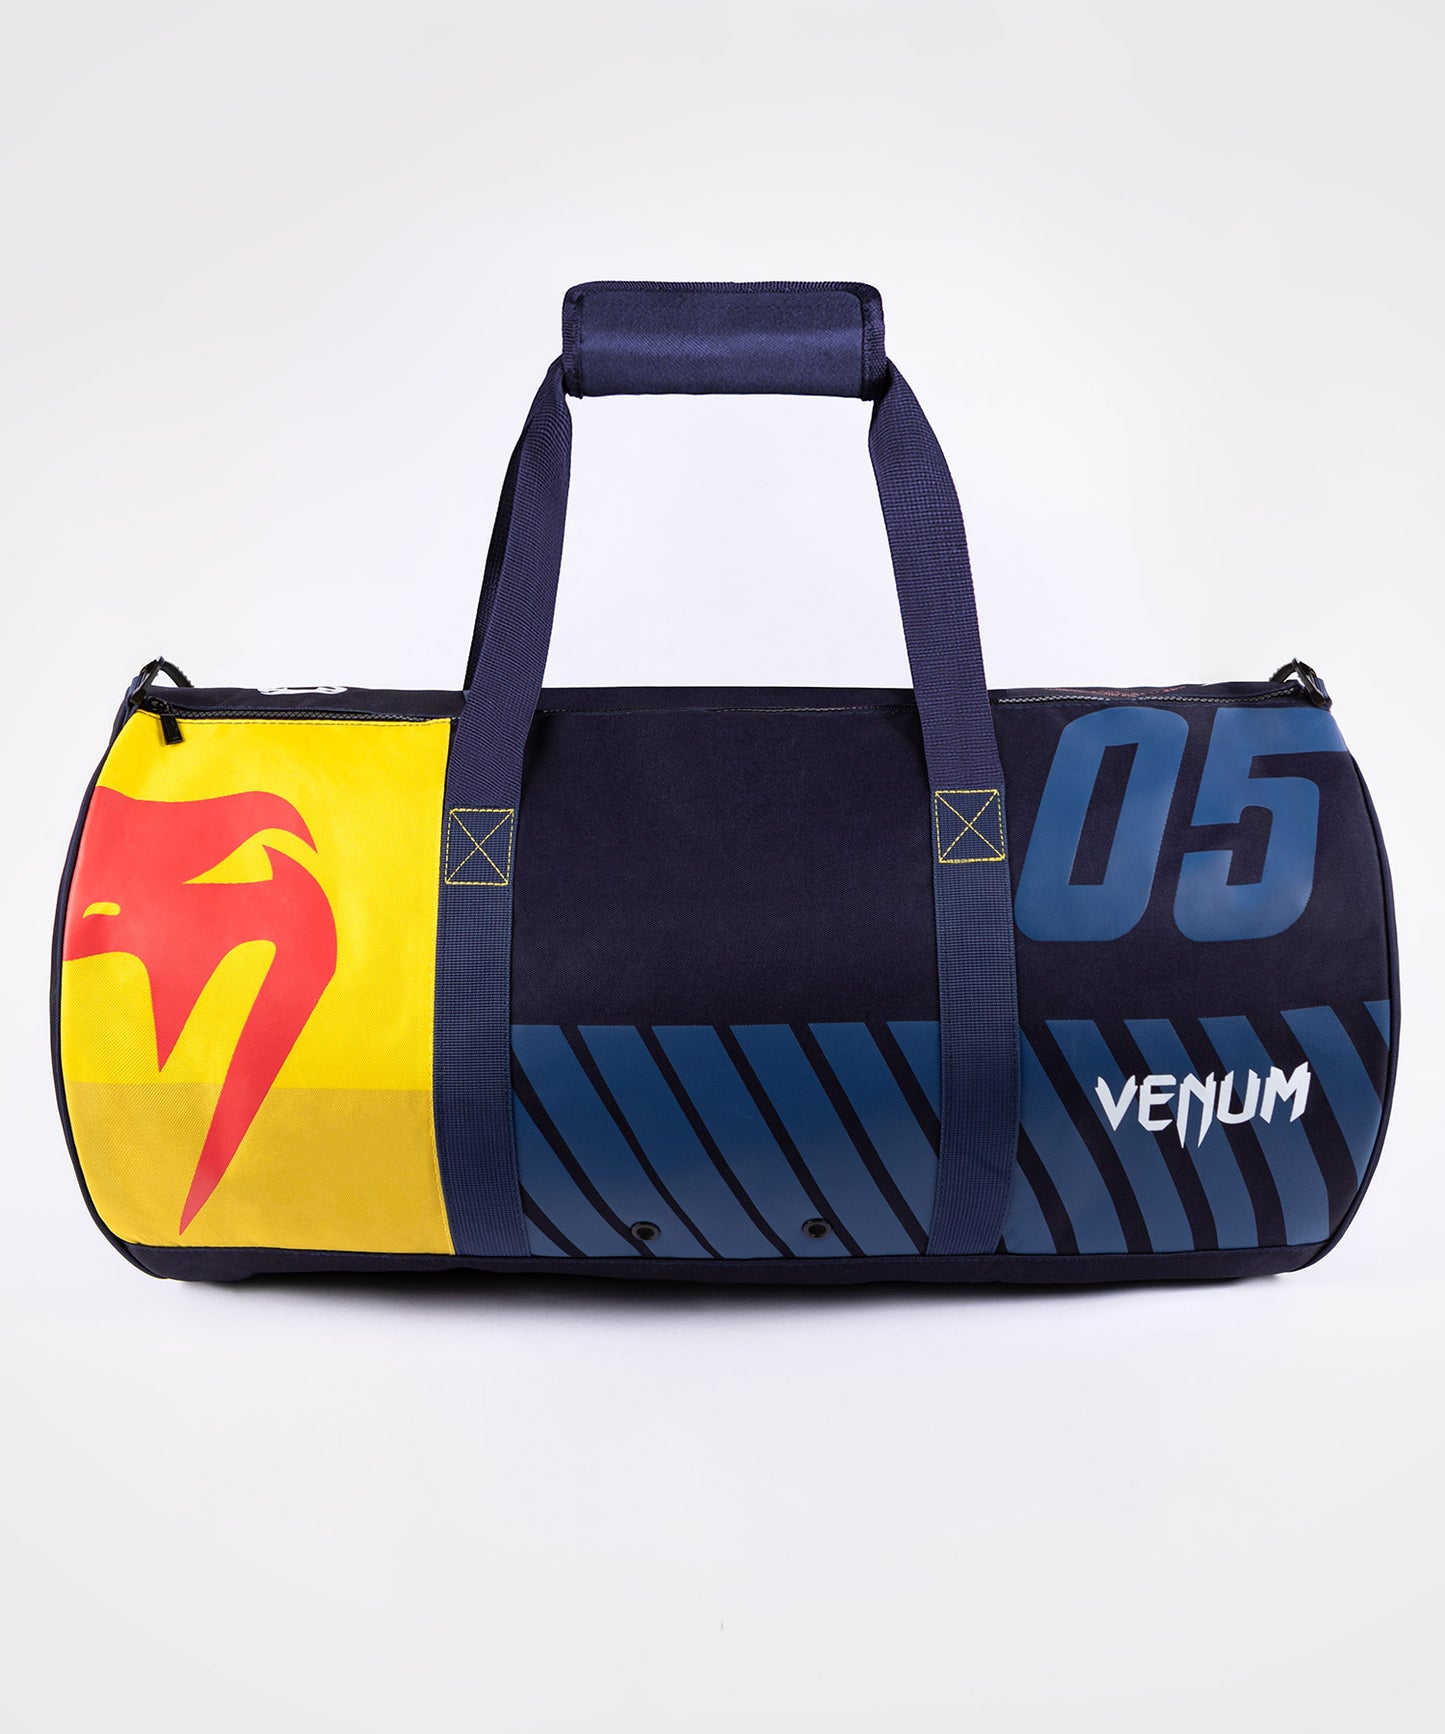 Venum Sport 05 Duffle Bag - Blue/Yellow - Venum